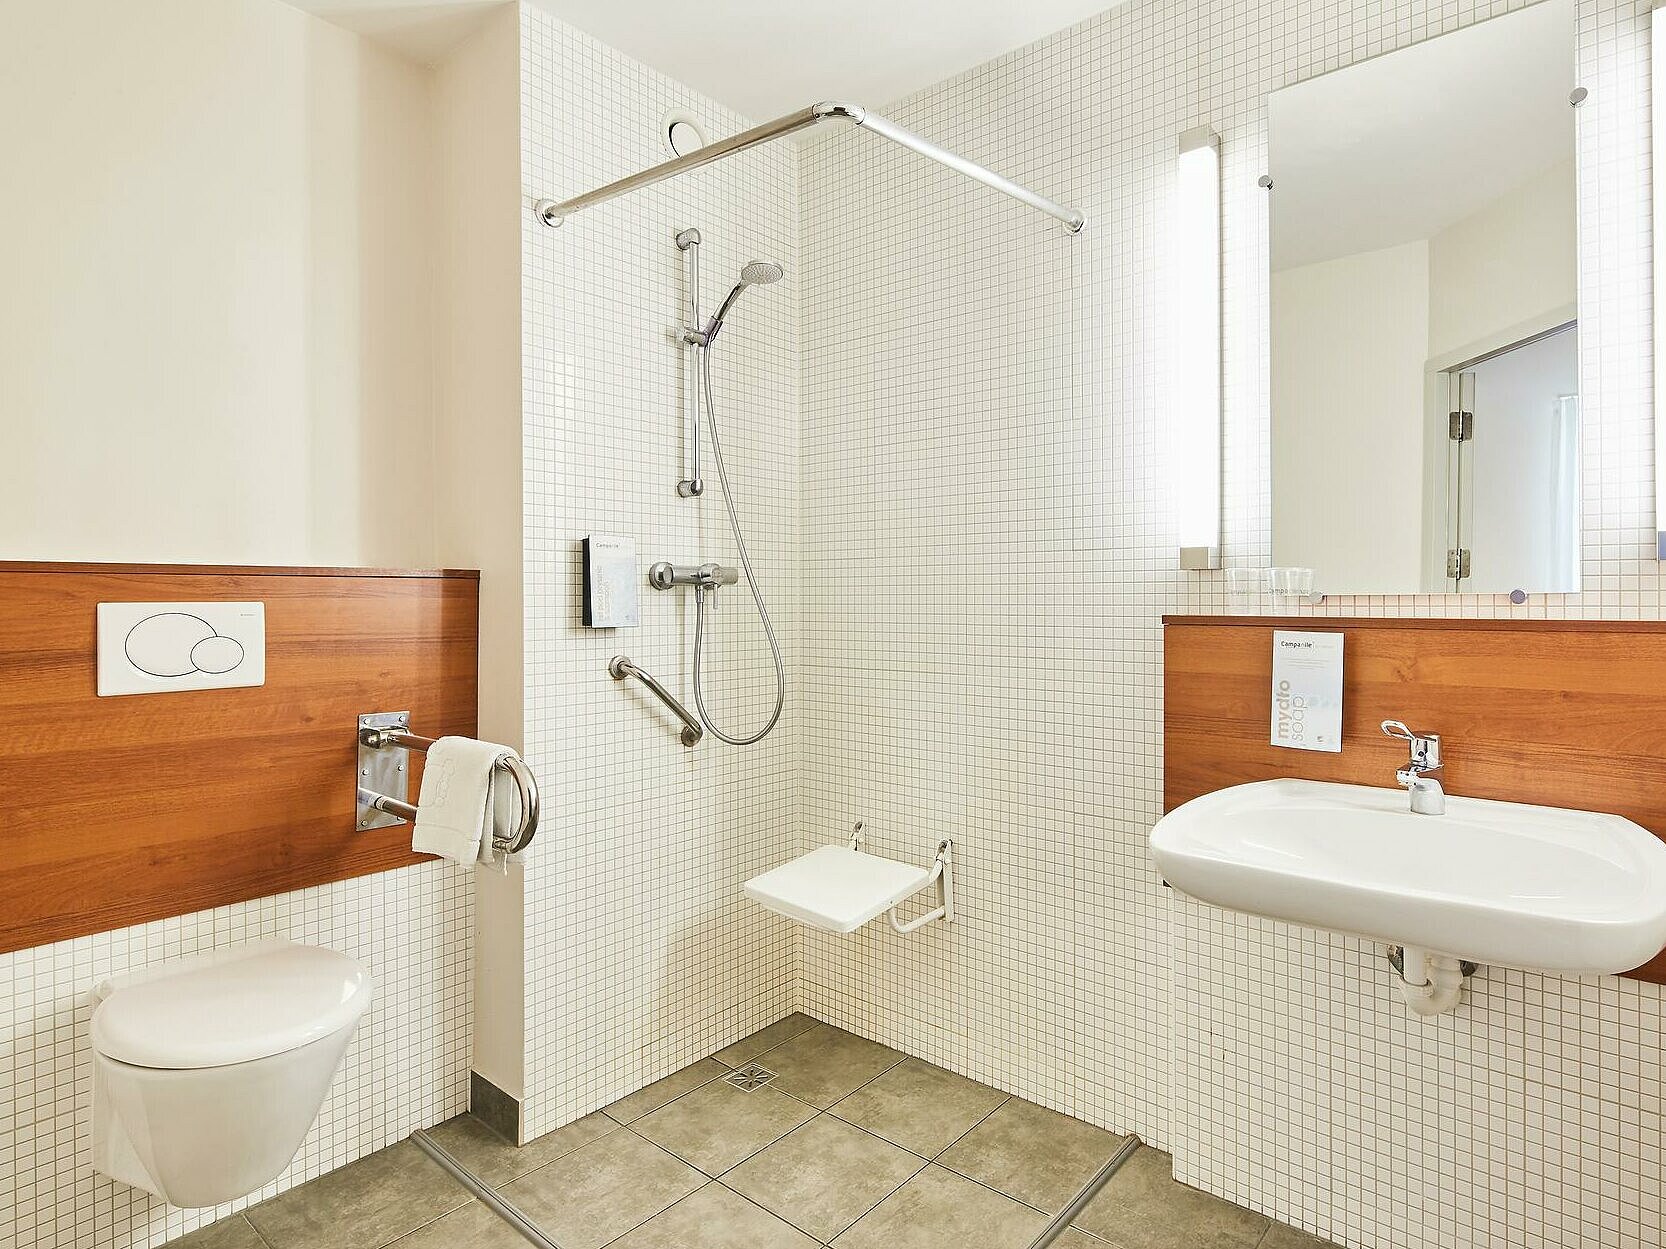 Campanile Hotel handicapped bathroom  